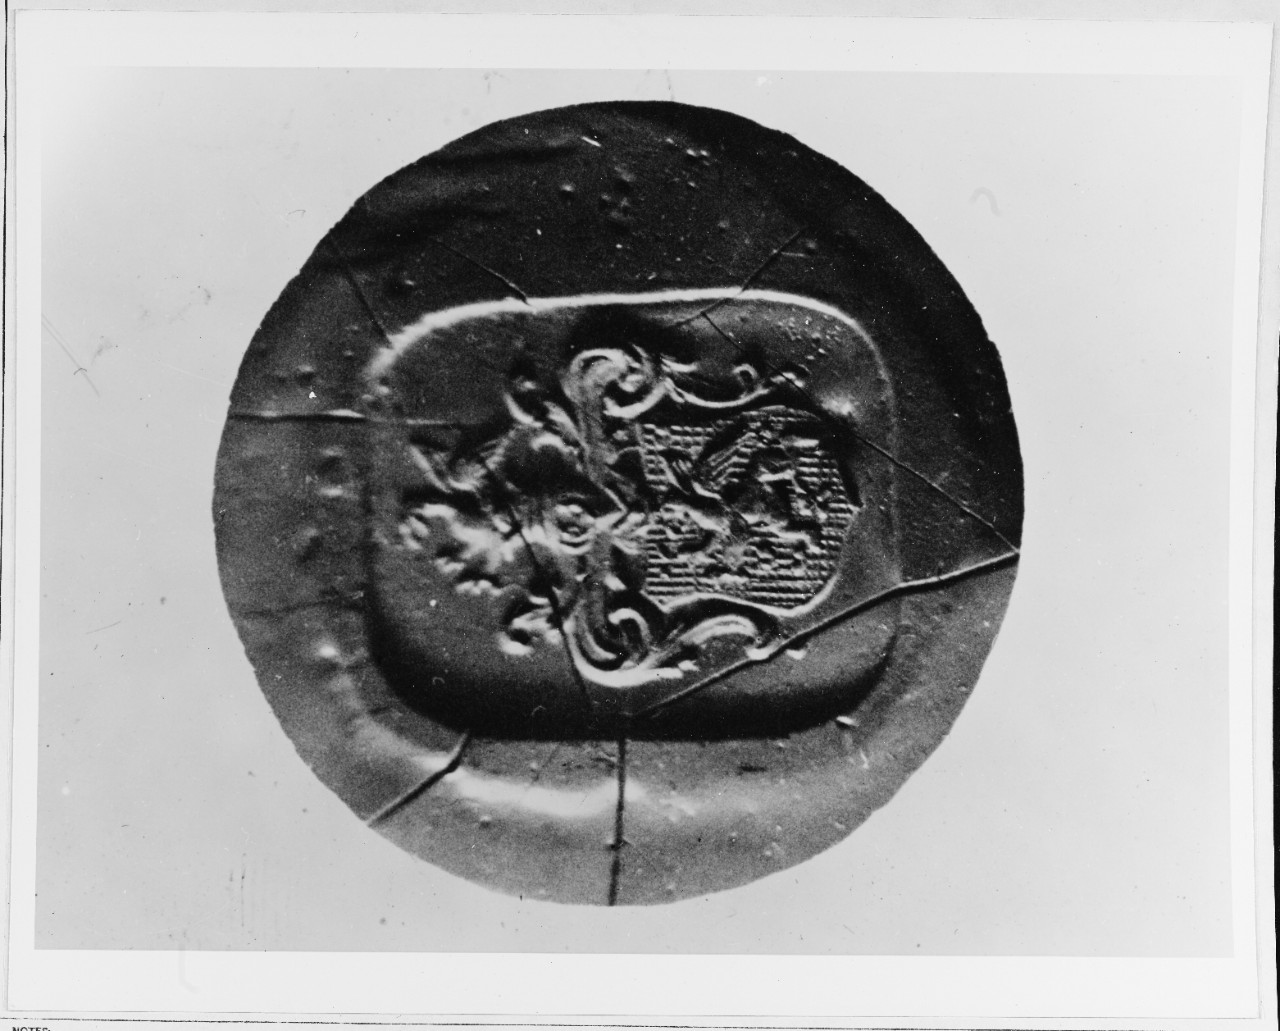 Eighteenth century seal